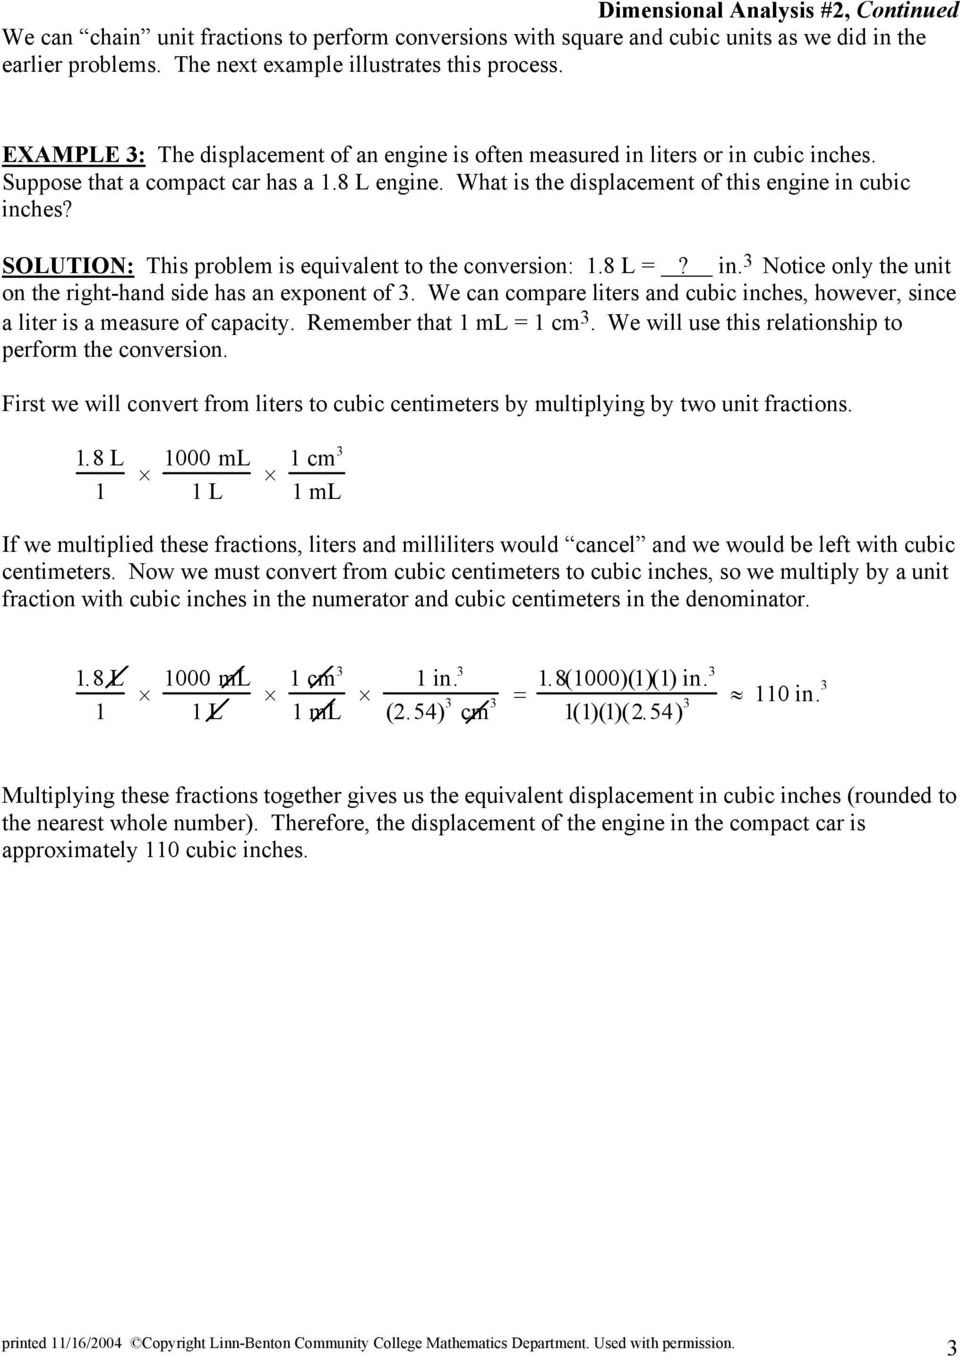 Dimensional Analysis Problems Worksheet Dimensional Analysis 2 Pdf Free Download